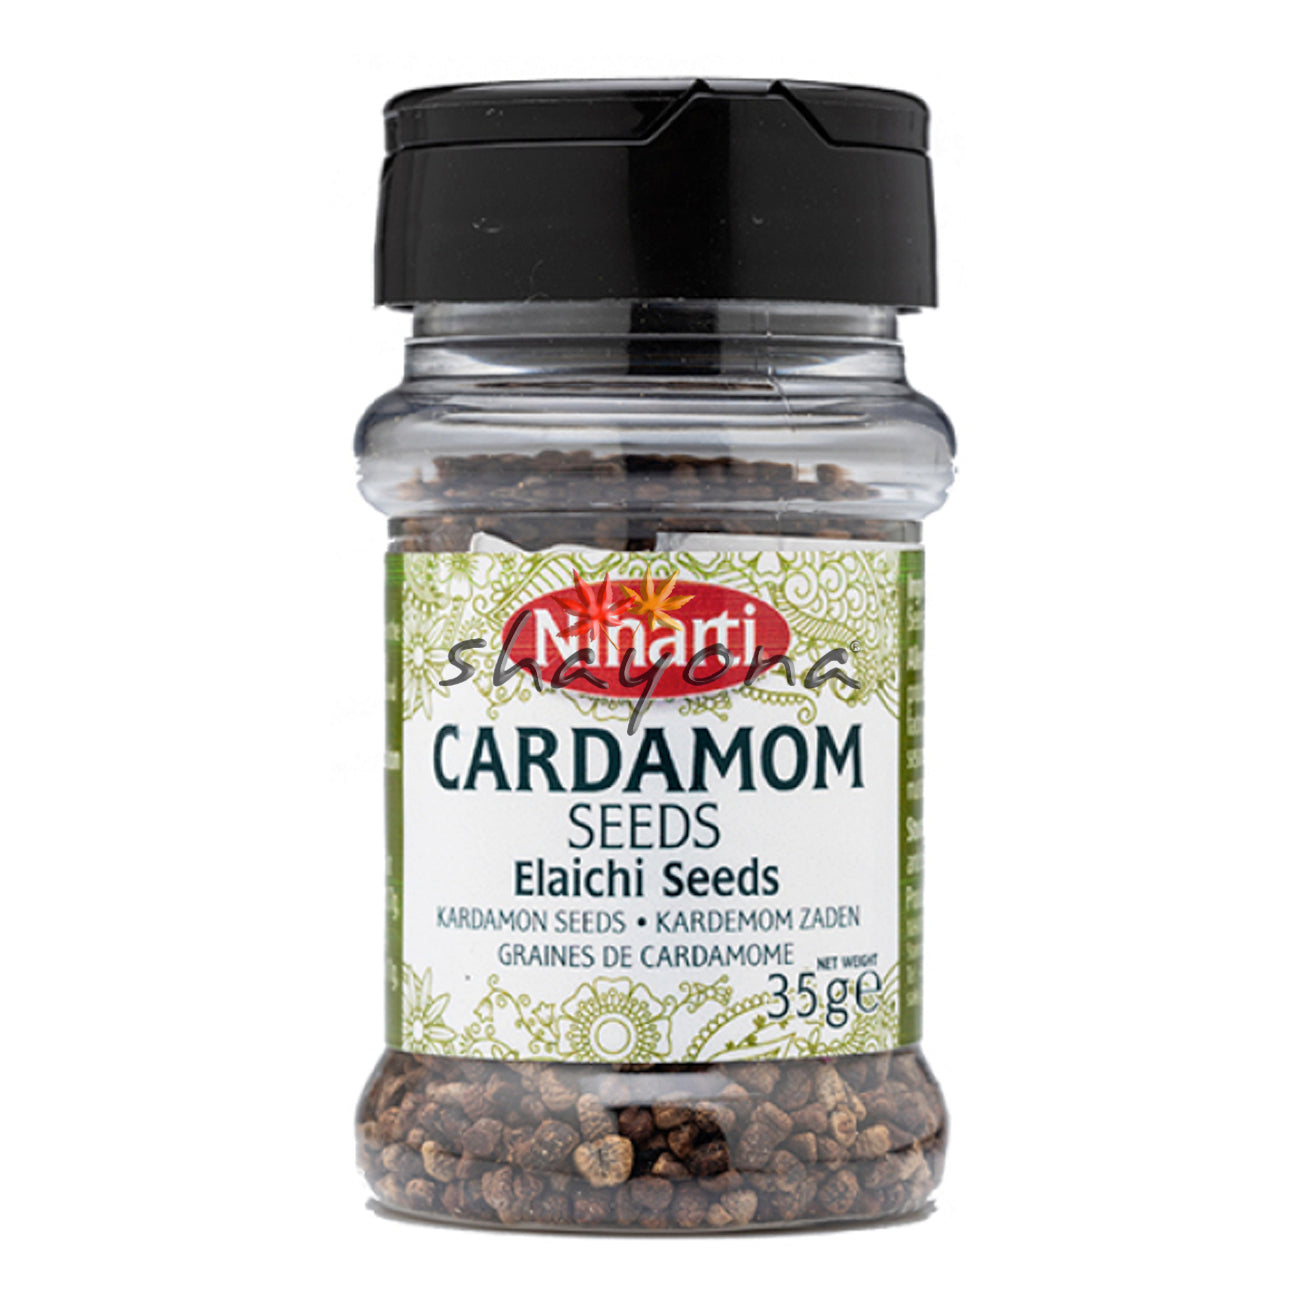 Niharti Cardamom Seeds